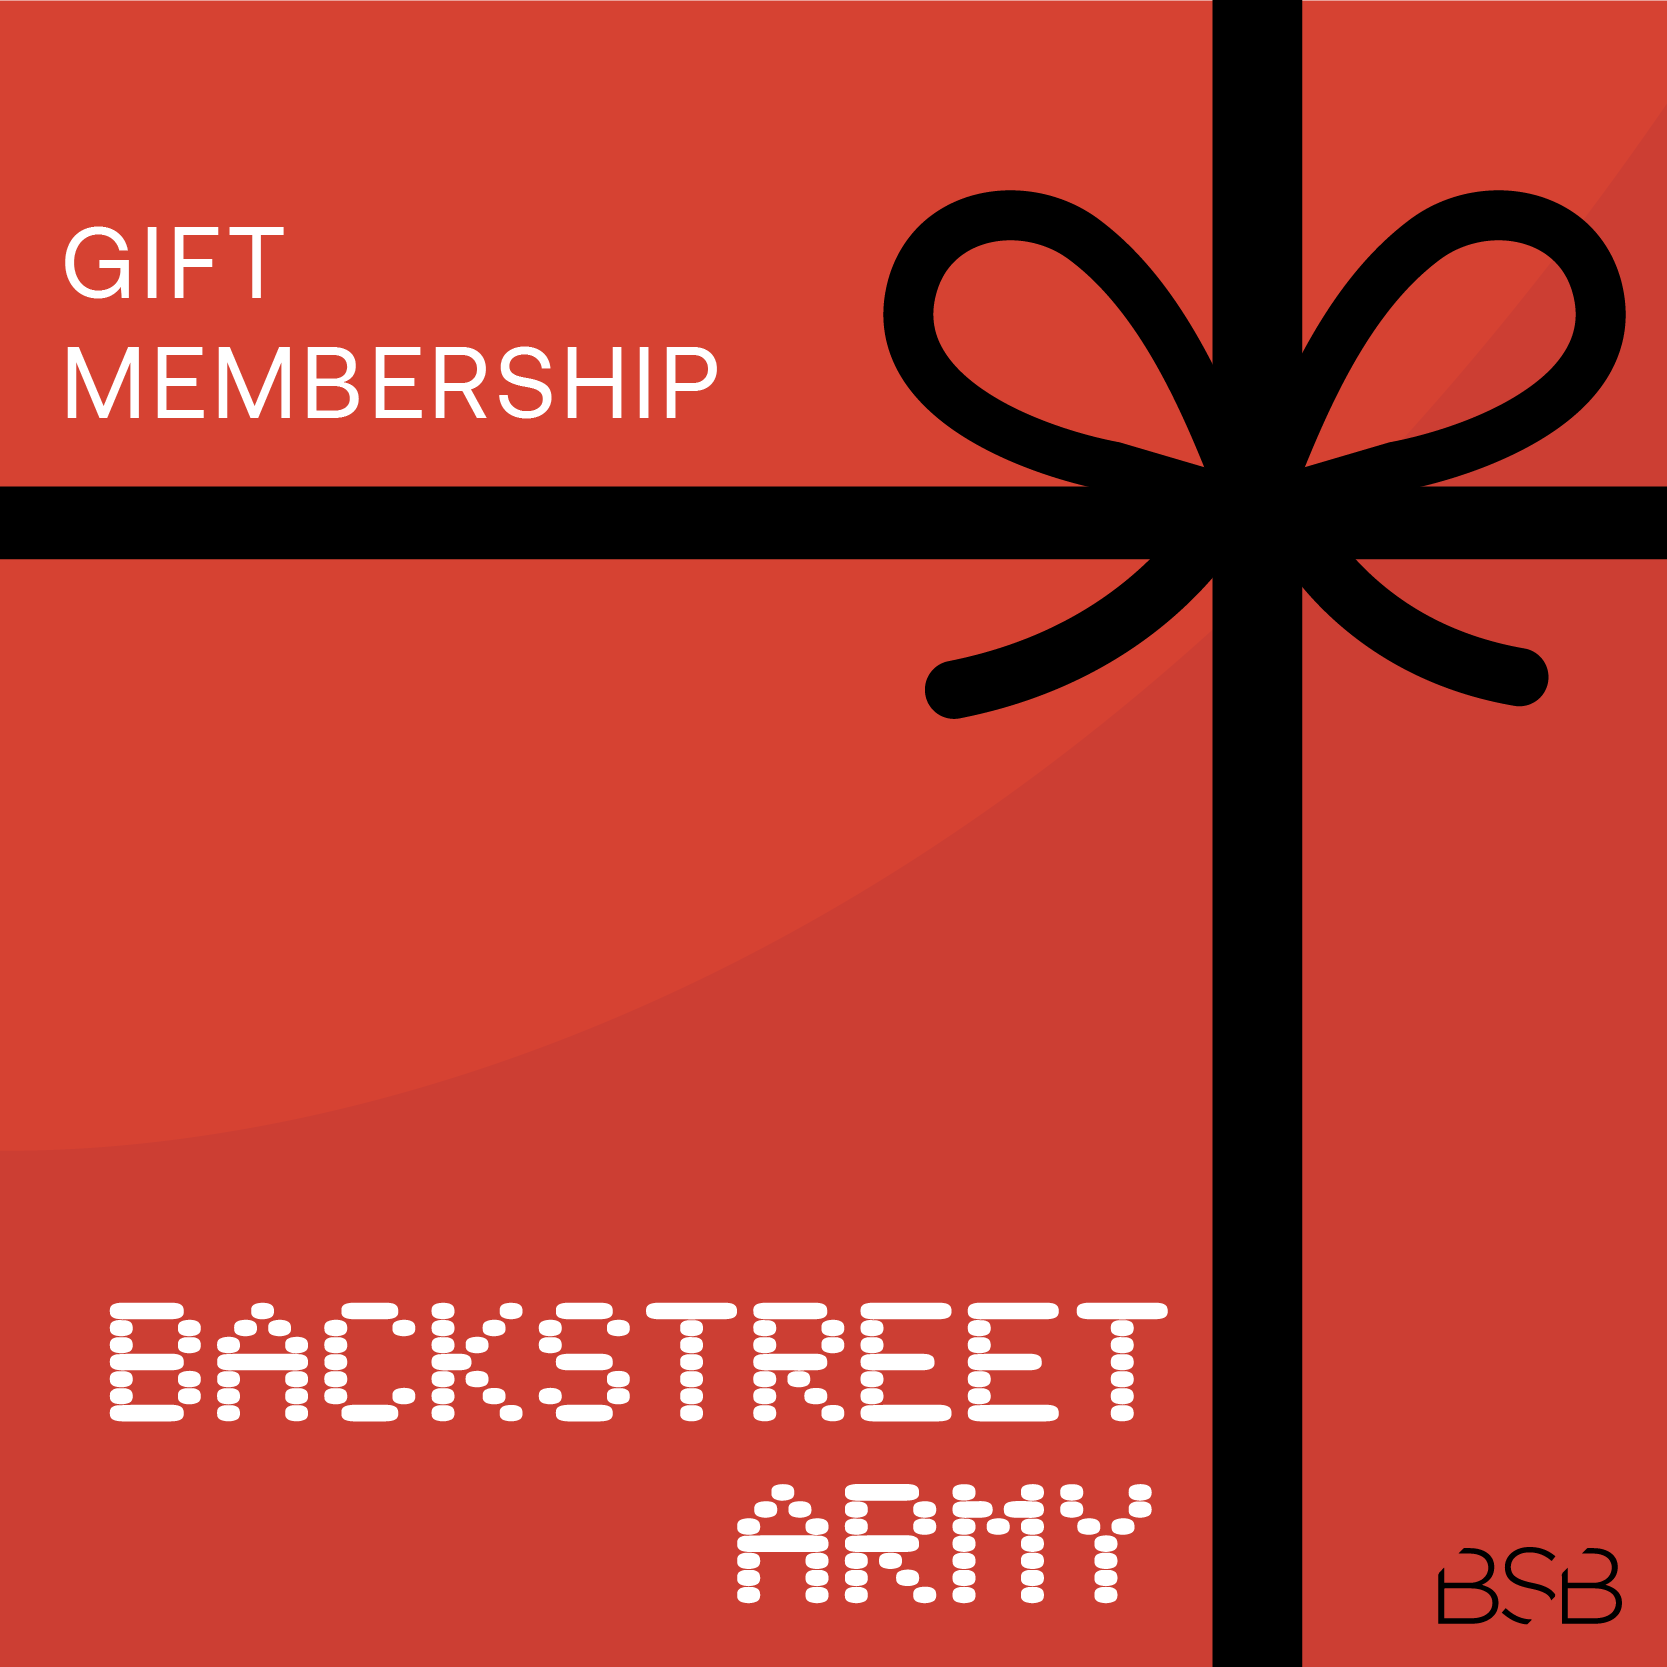 Backstreet Army 1-Year Gift Membership